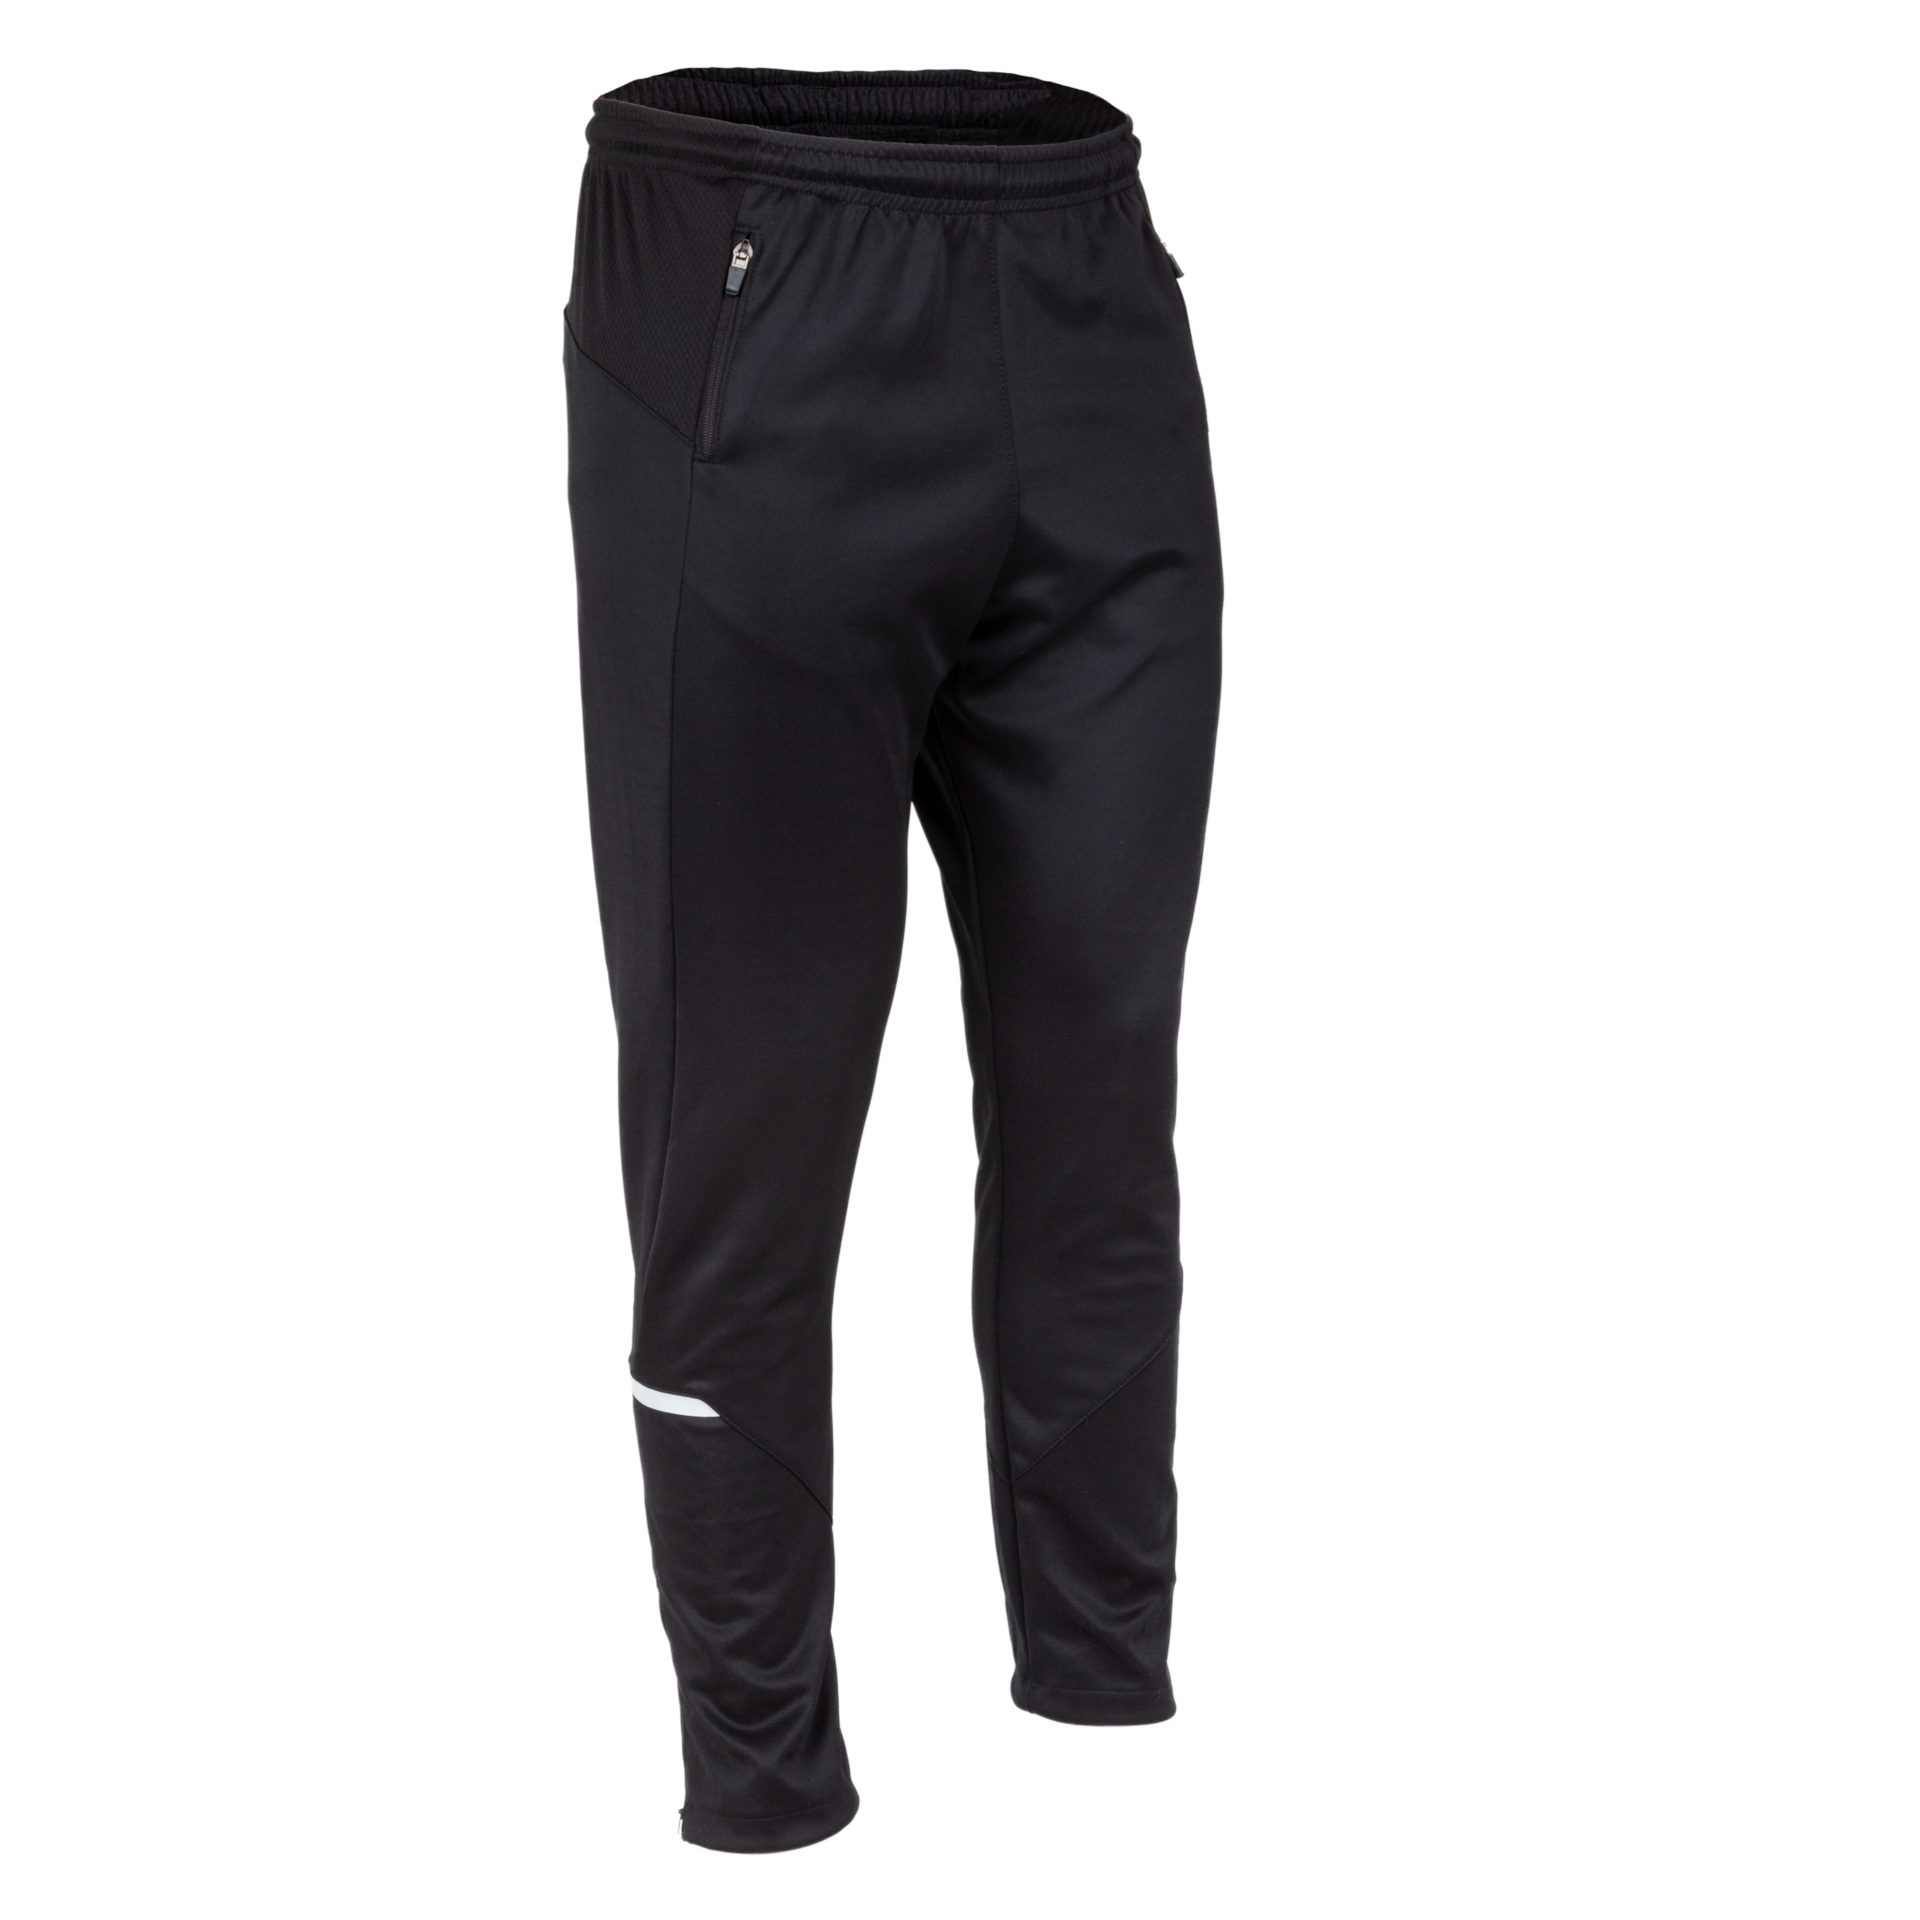 Pants (slim fit) - Negro con vinil blanco